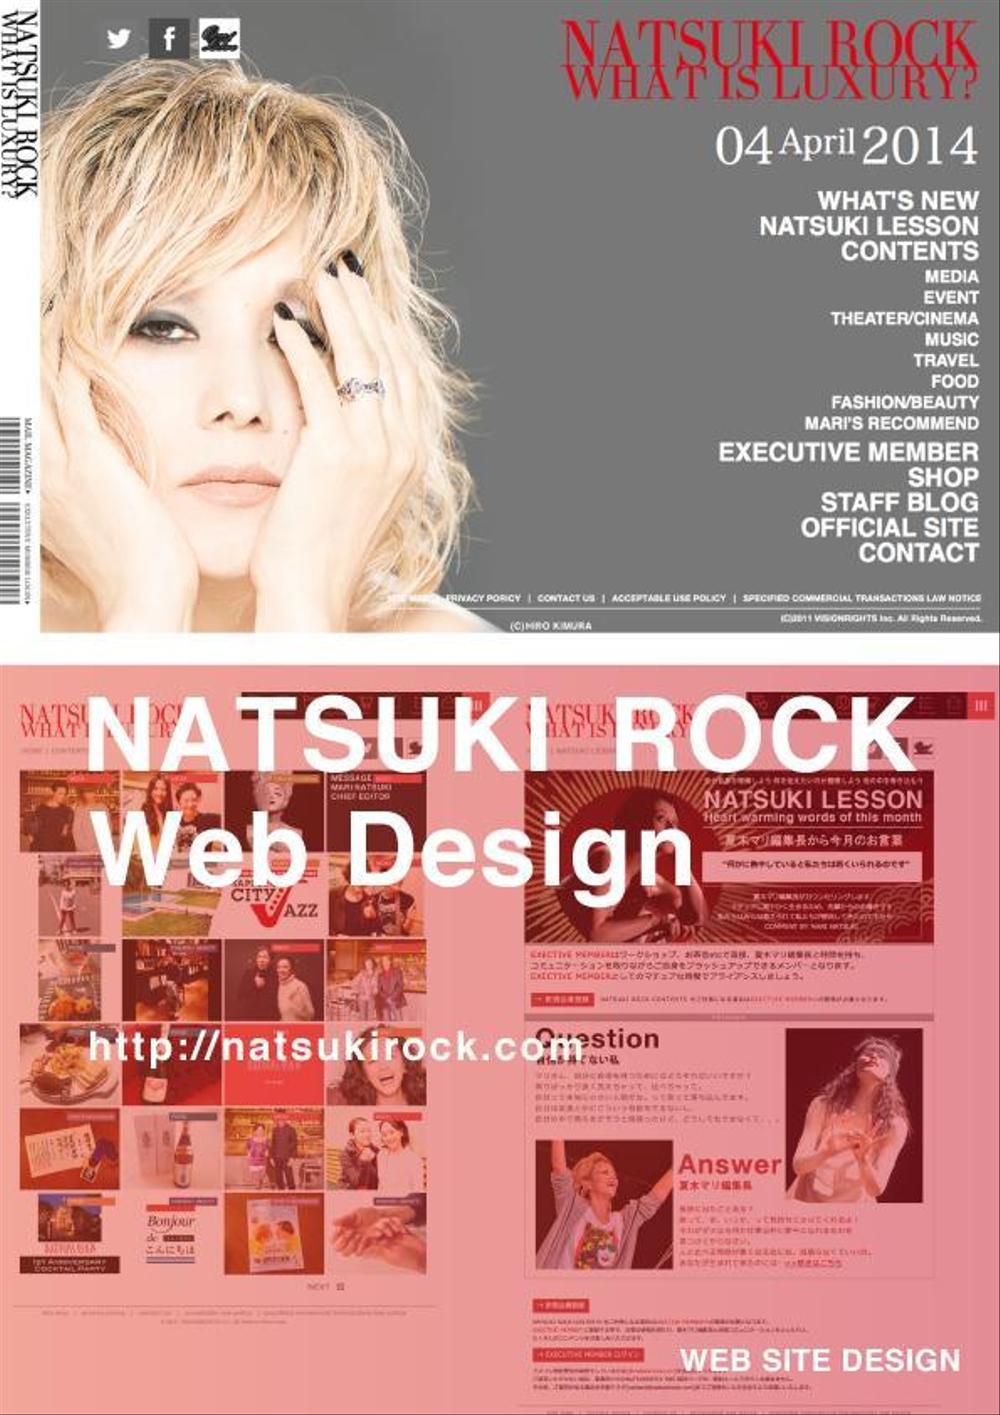 2014 -Port folio- NATSUKI ROCK Web site design